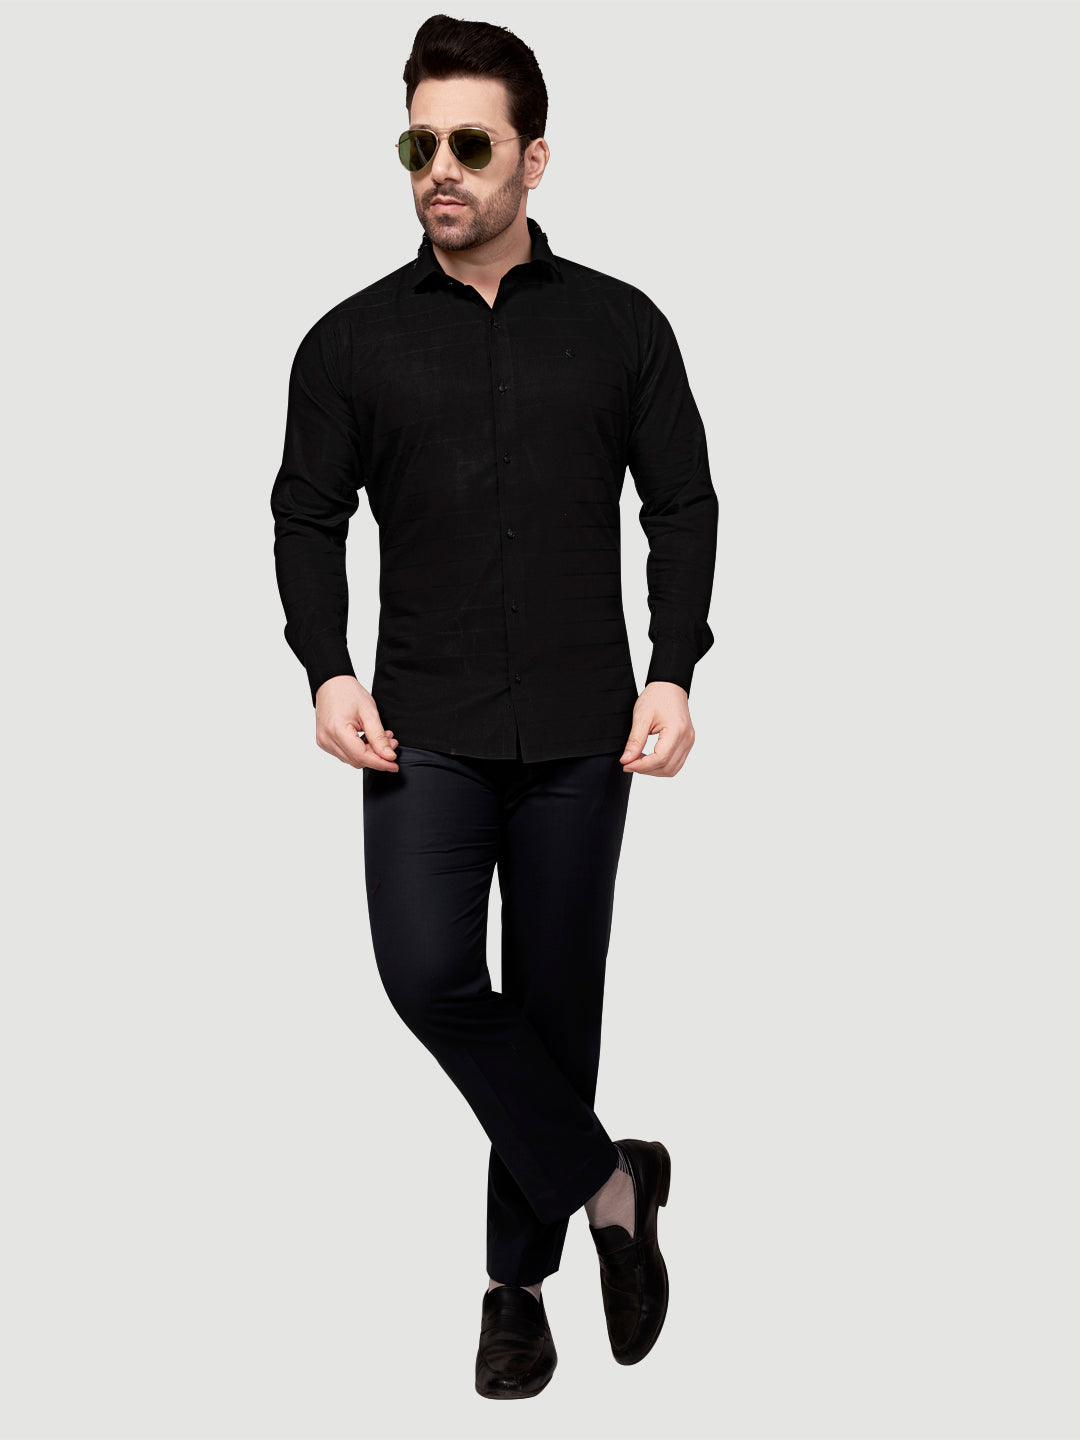 Black and White Men's Designer Shirt with Collar Accessory & Designer Broach Black